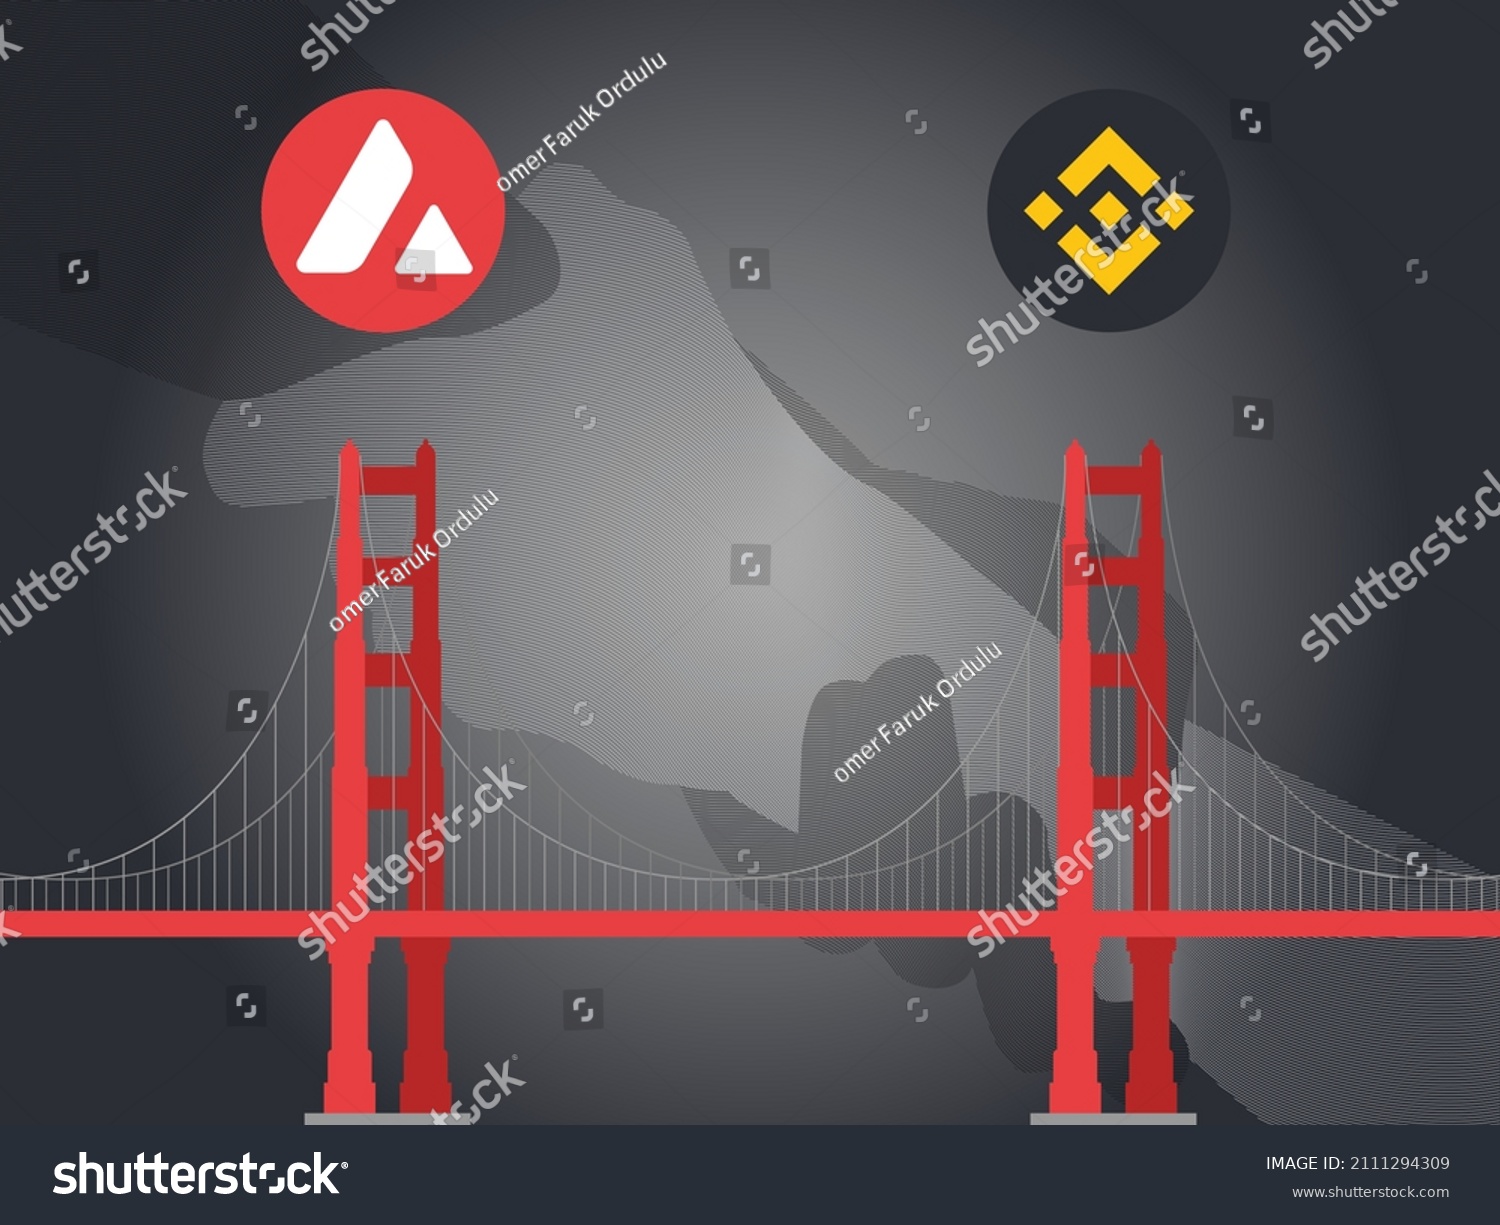 SVG of Avax bridge design background. Avalanche bridges support Binance Coin (BNB). Avalanche or Avax helping Binance Smart Chain (BSC). svg